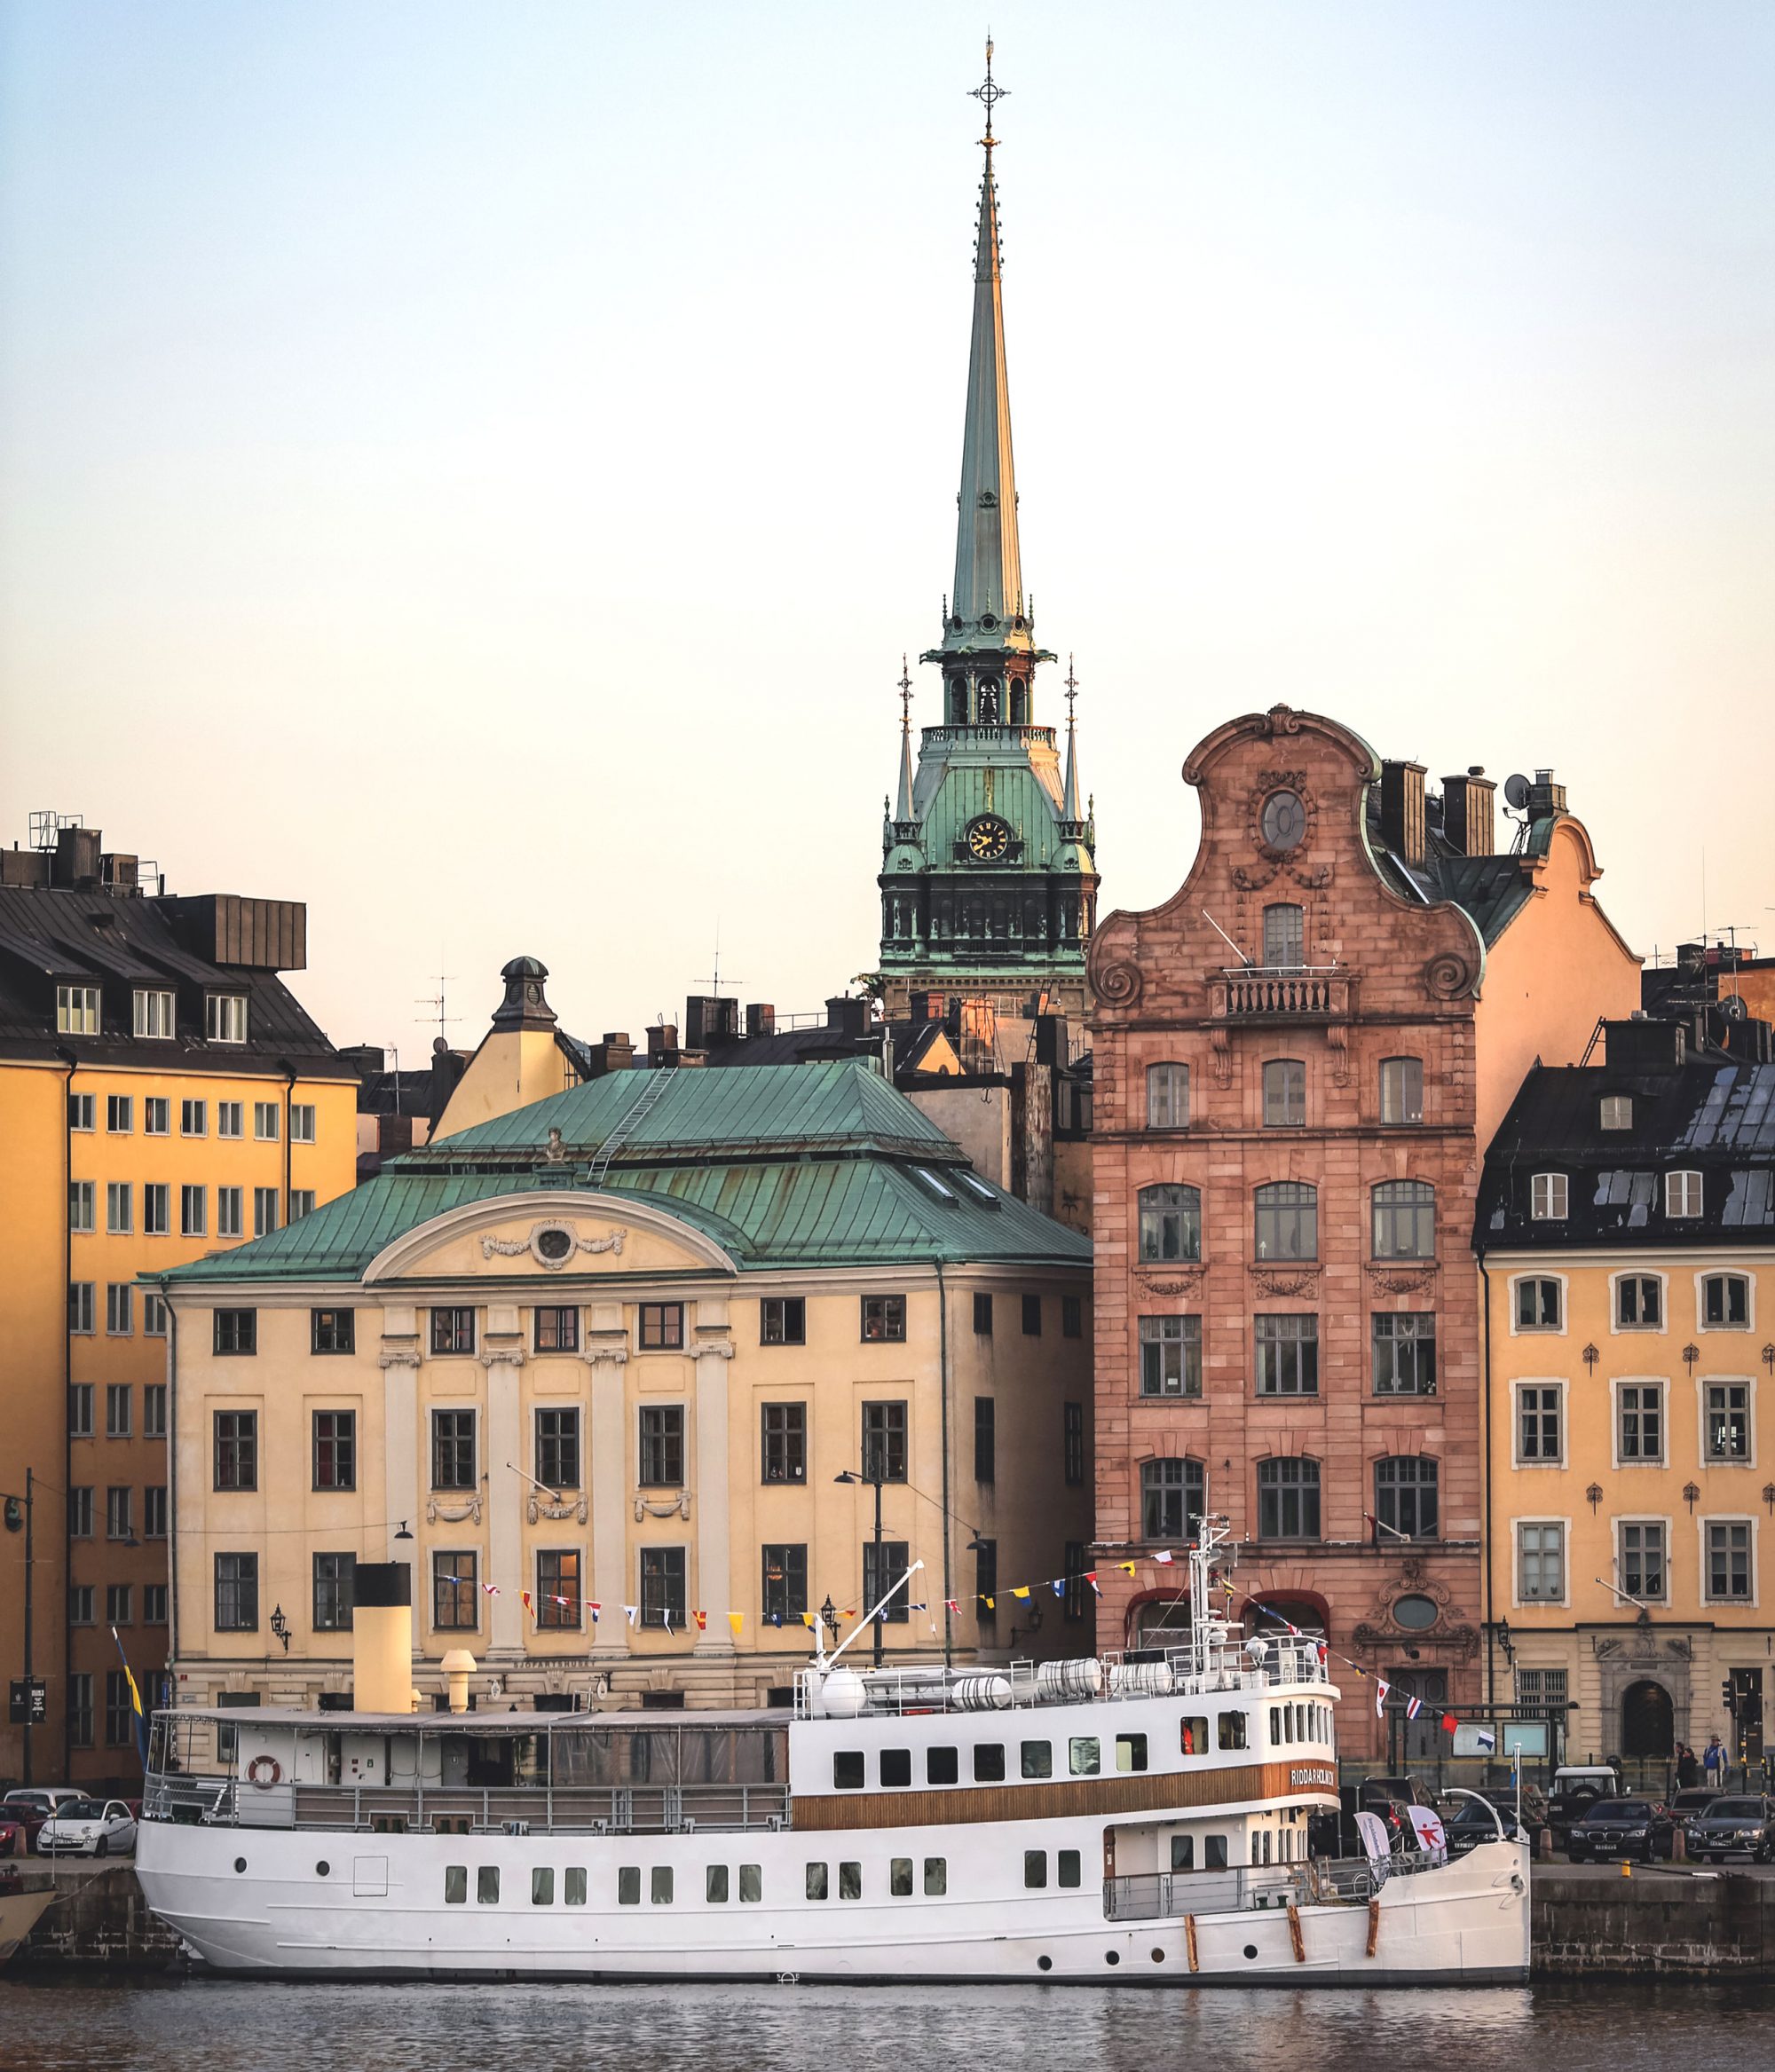 Båt vid kaj i Gamla stan Stockholm